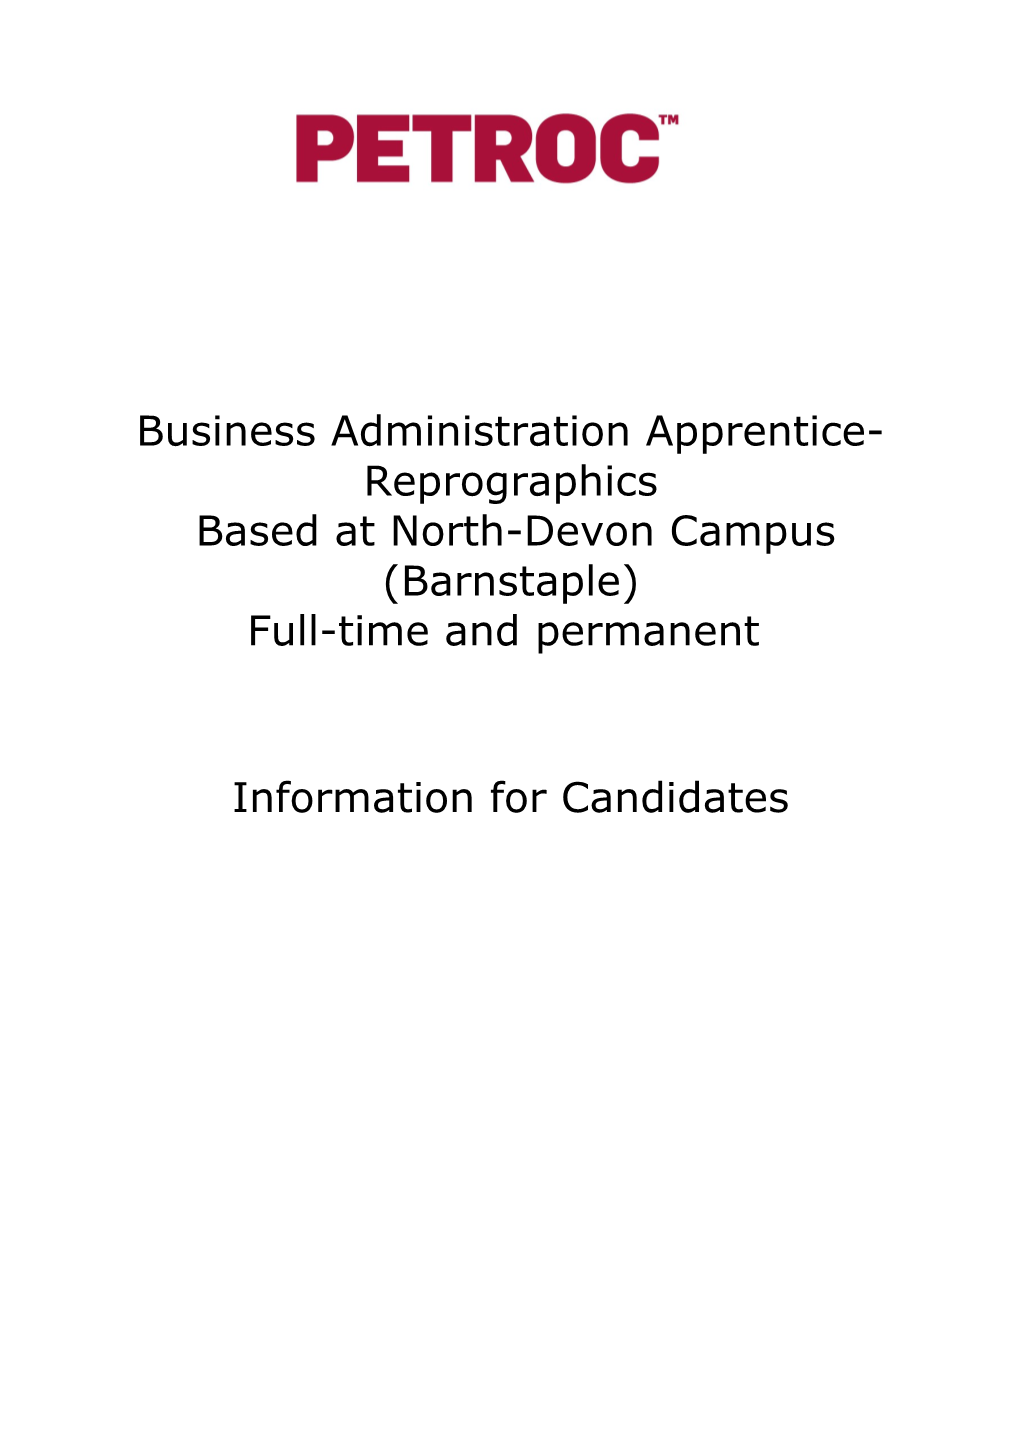 Business Administration Apprentice- Reprographics